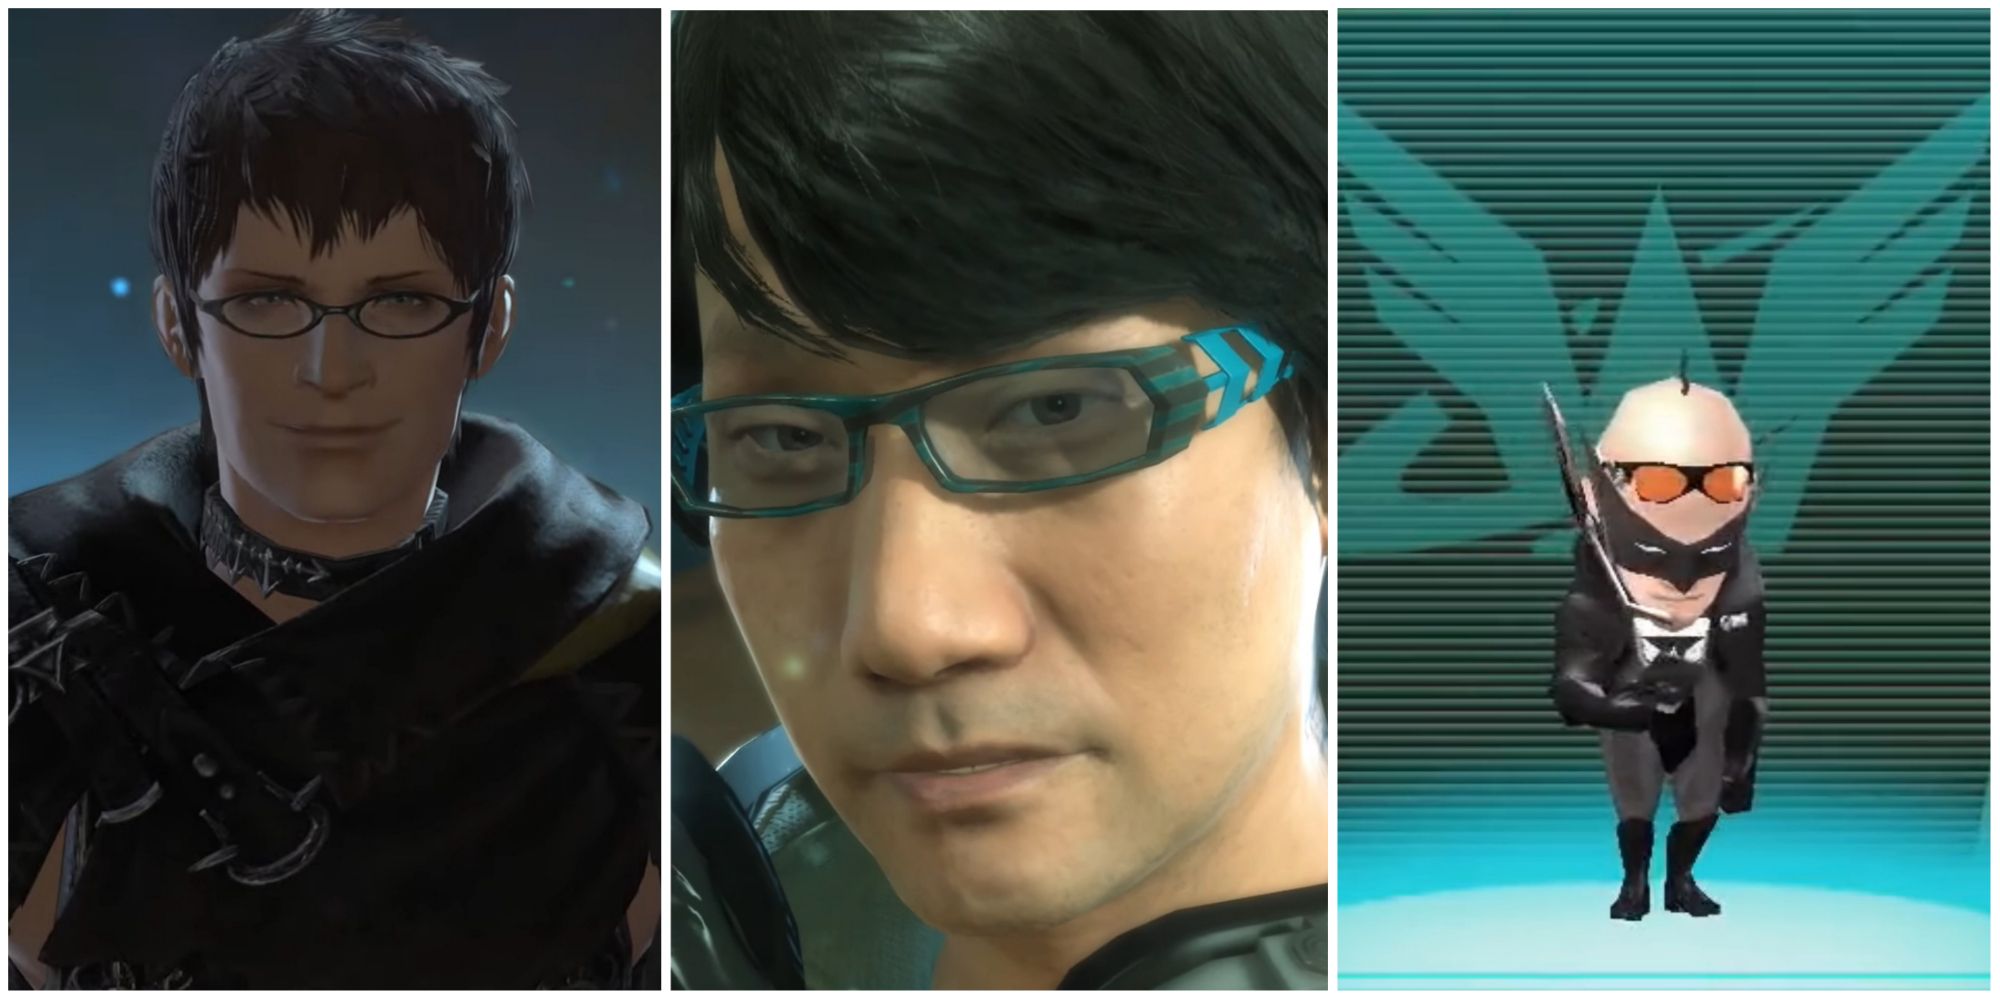 Naoki Yoshida in Final Fantasy XIV, Hideo Kojima in Metal Gear Solid V: Ground Zeroes, and Hideki Kamiya in The Wonderful 101.